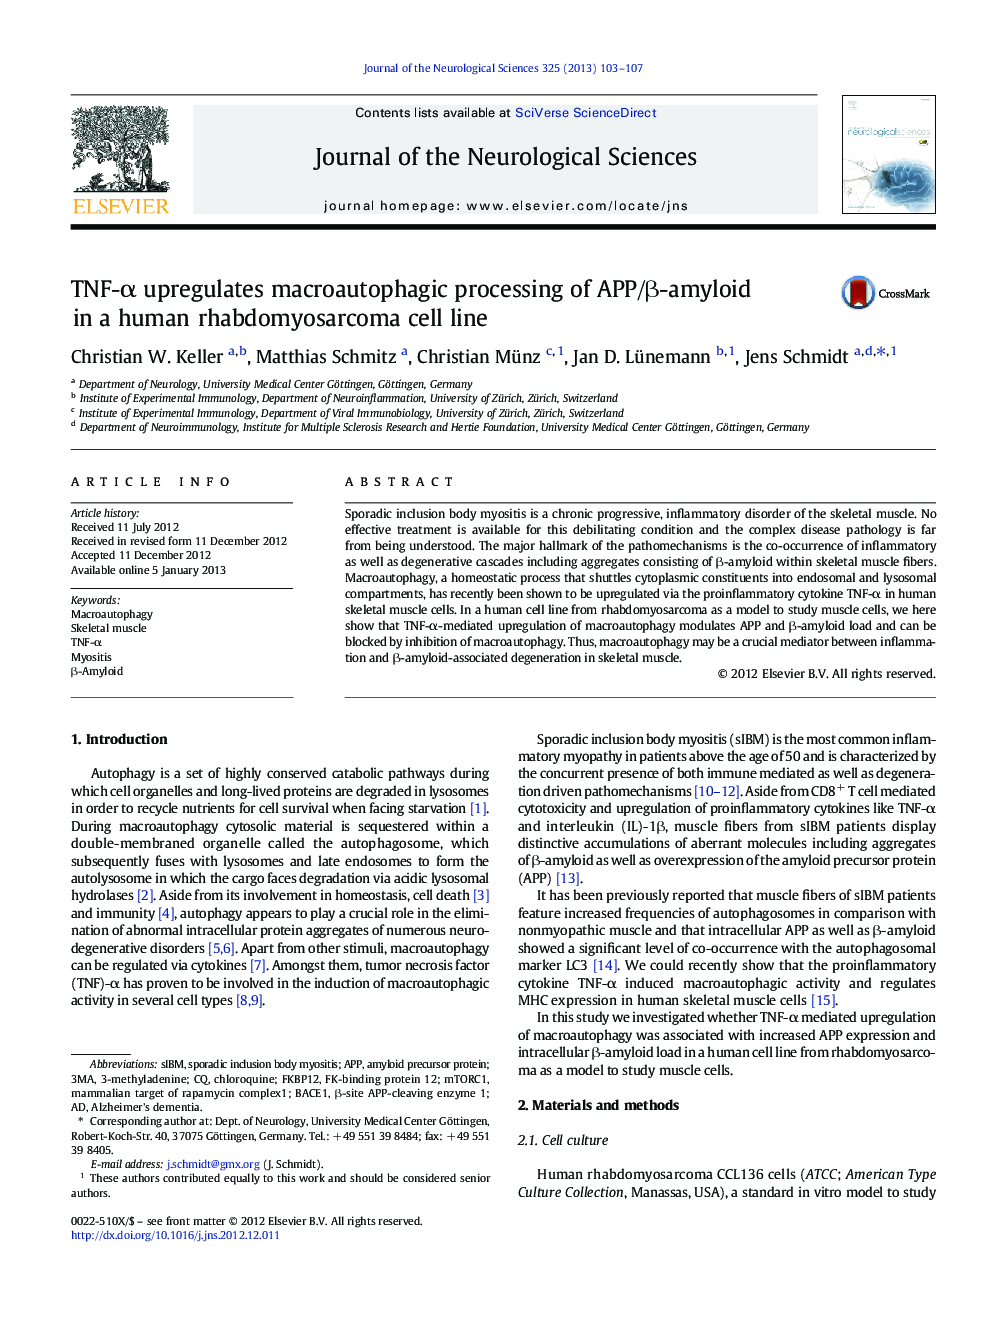 TNF-Î± upregulates macroautophagic processing of APP/Î²-amyloid in a human rhabdomyosarcoma cell line